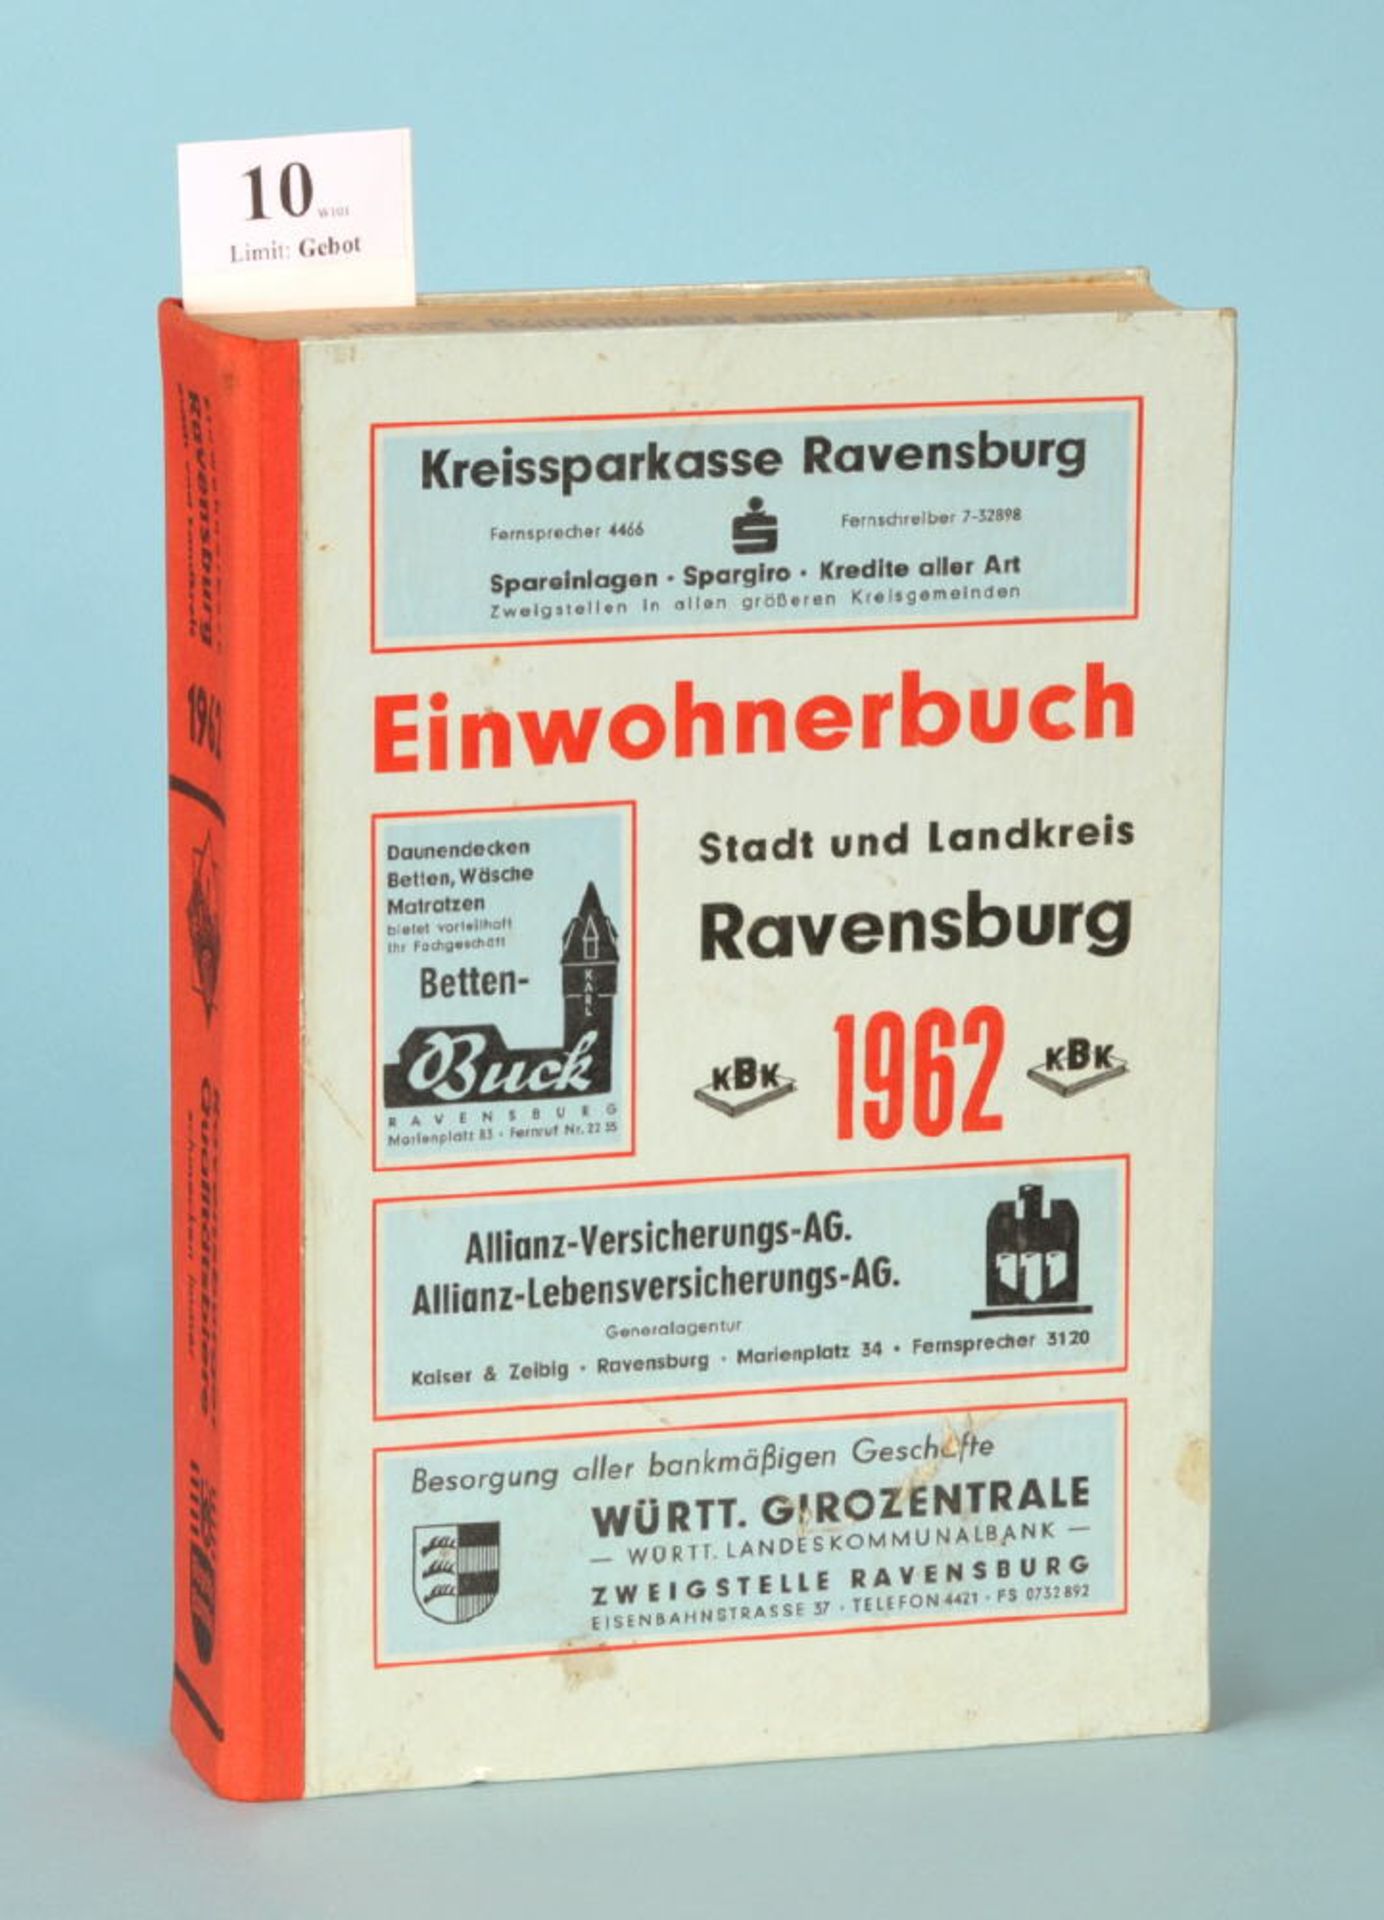 Einwohnerbuch Stadt und Landkreis Ravensburg 1962738 S., KBK-Vlg., Karlsruhe, 1962, KtE/LnR, l.Gsp.